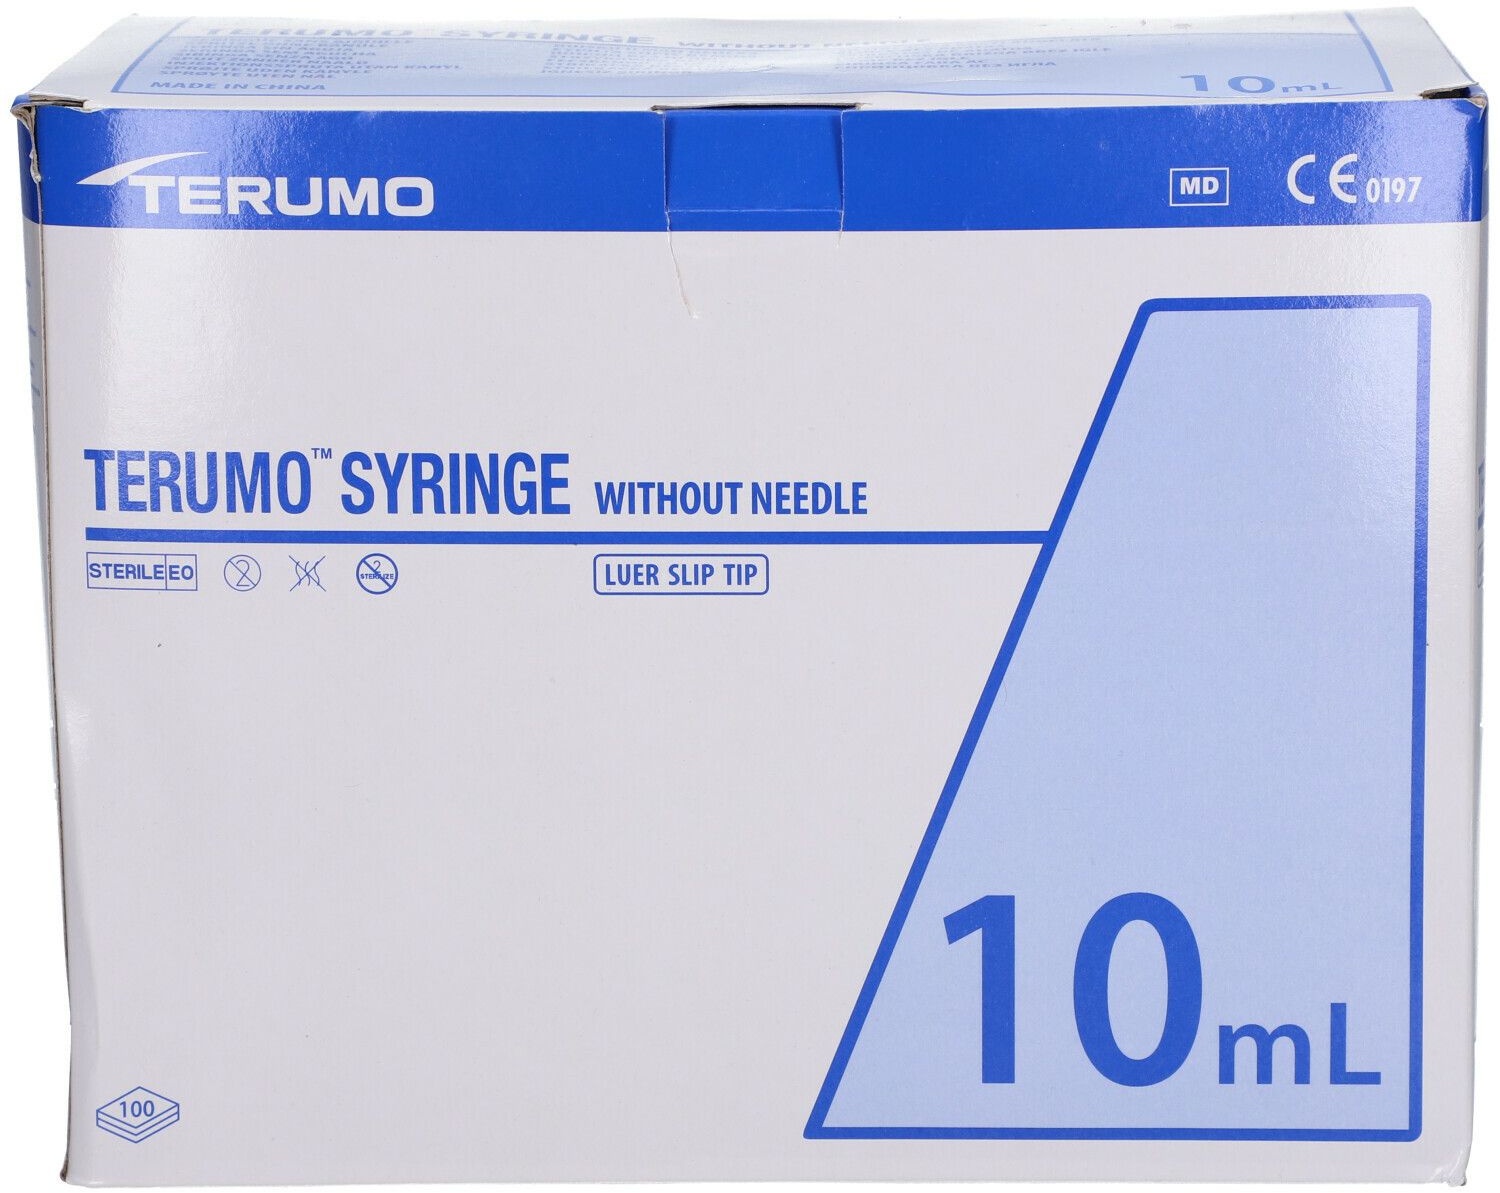 Terumo-Spritzen 10 ml ohne Nadel